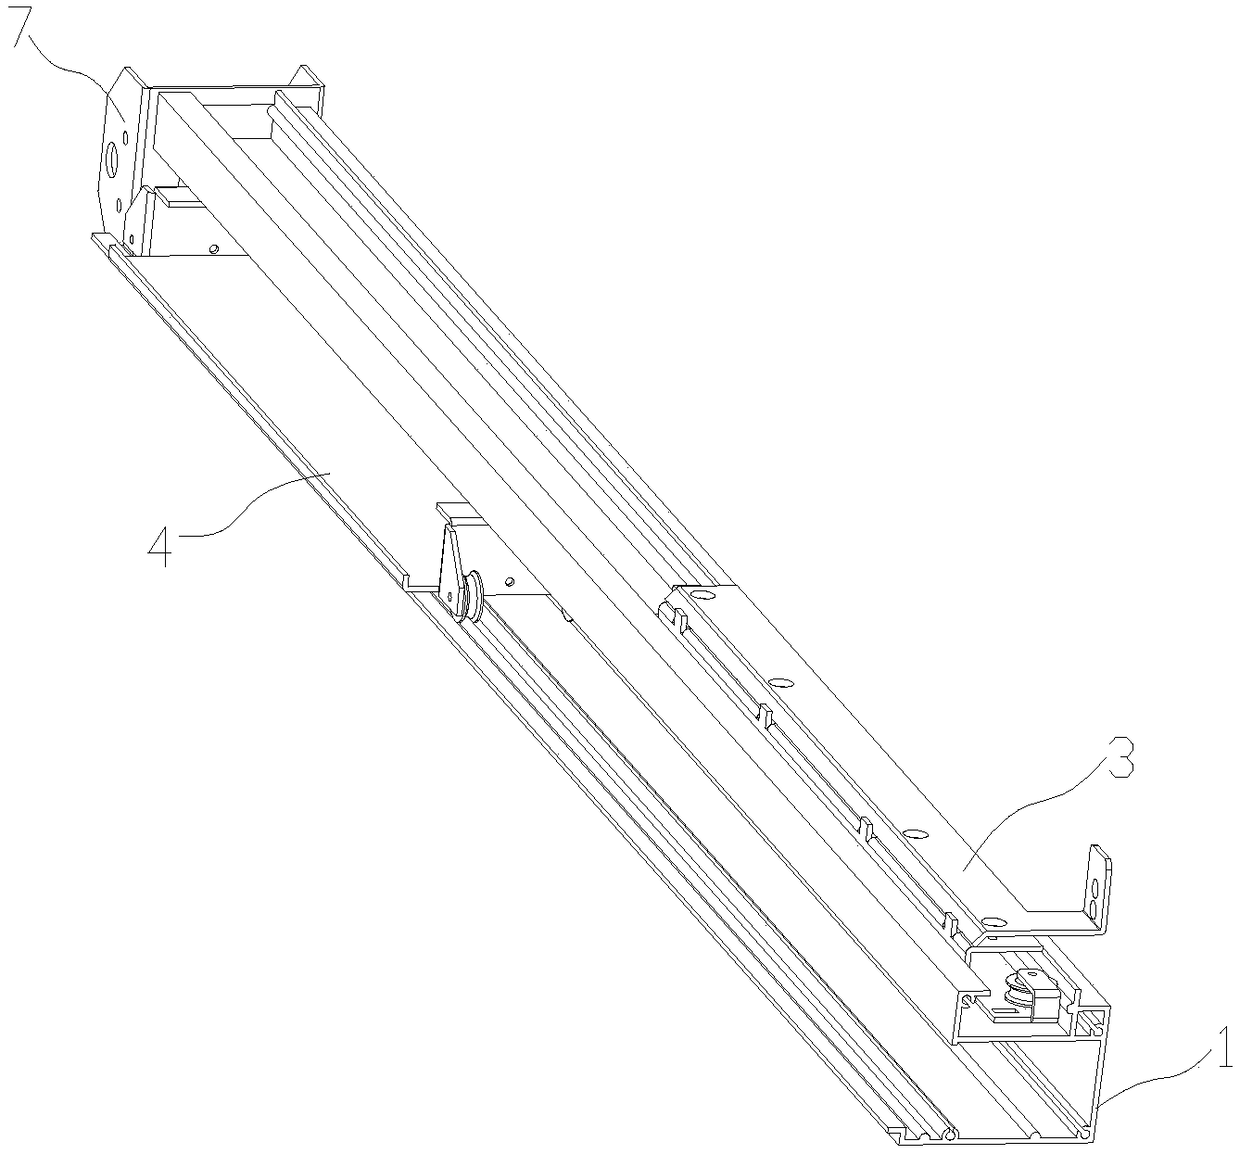 Laboratory fume hood glass door guide rail mechanism and device